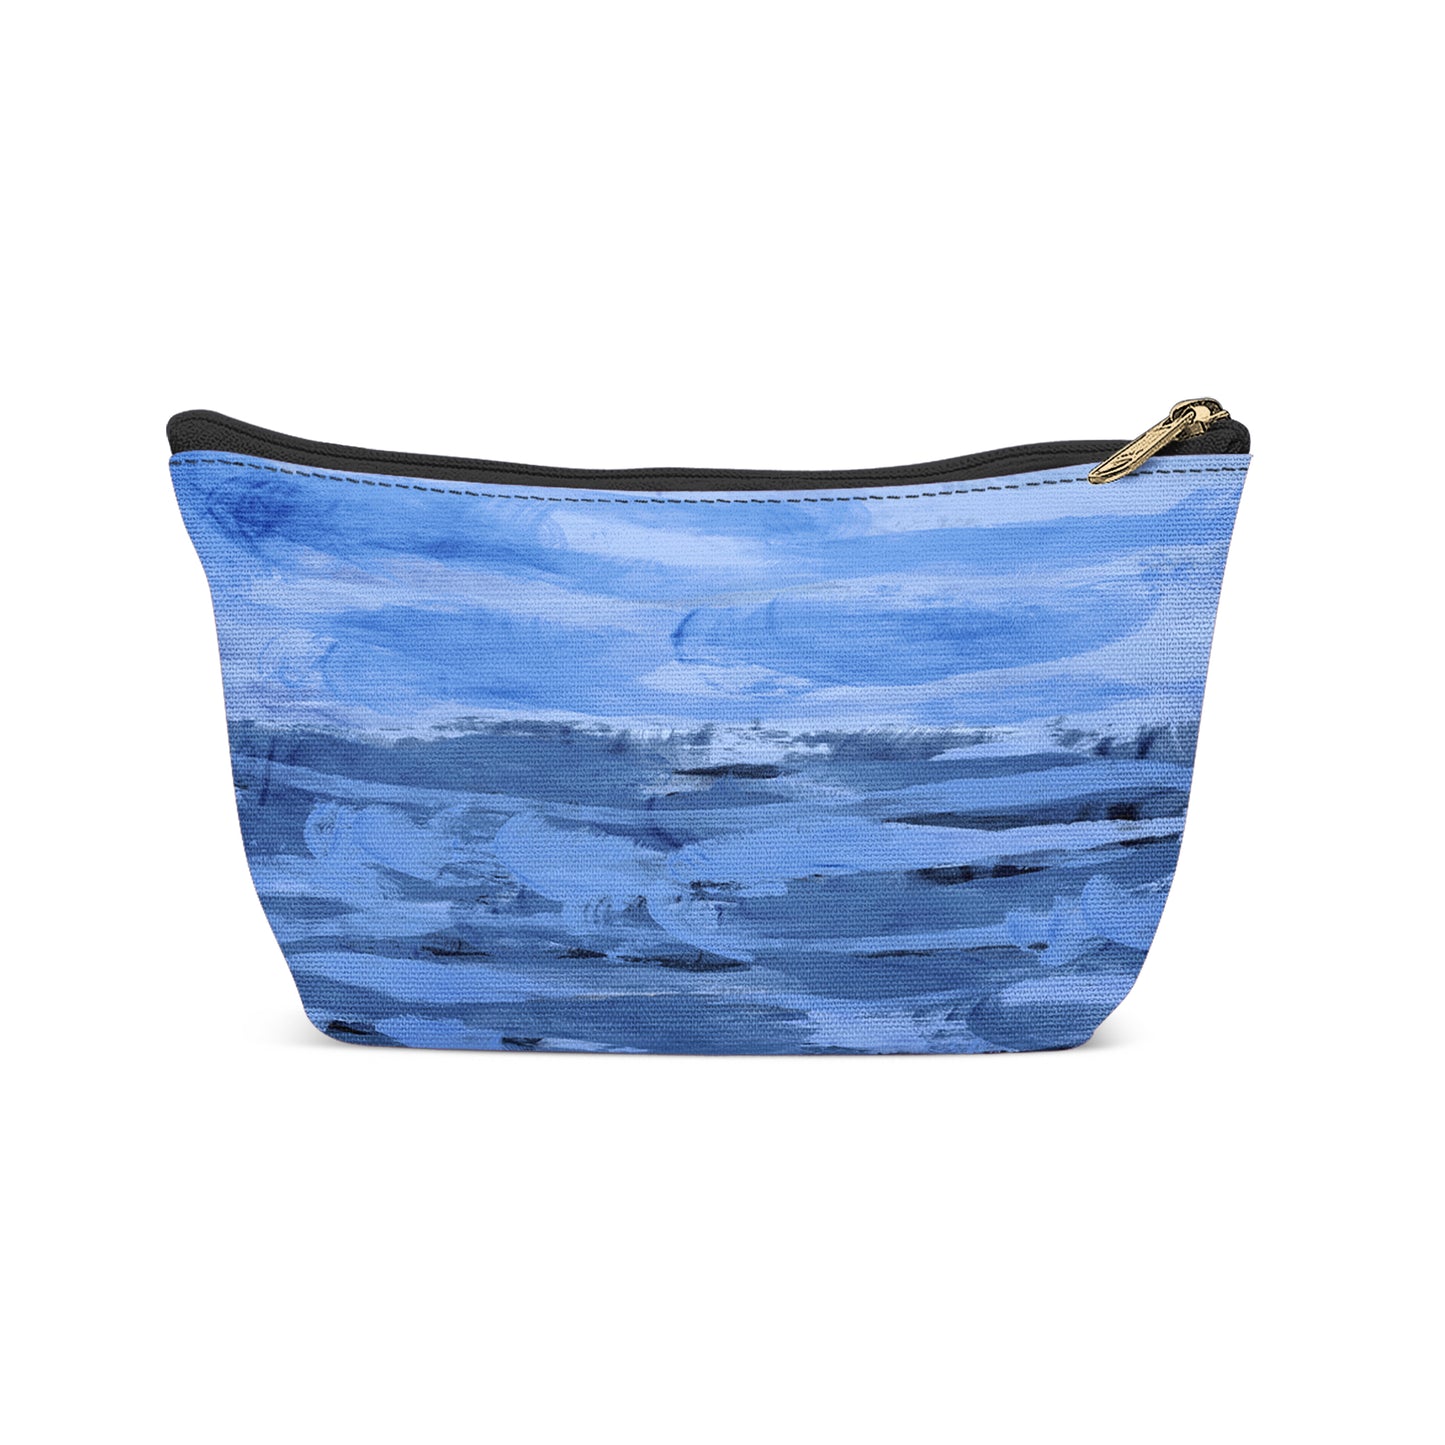 Painted Blue Sea Makeup Bag